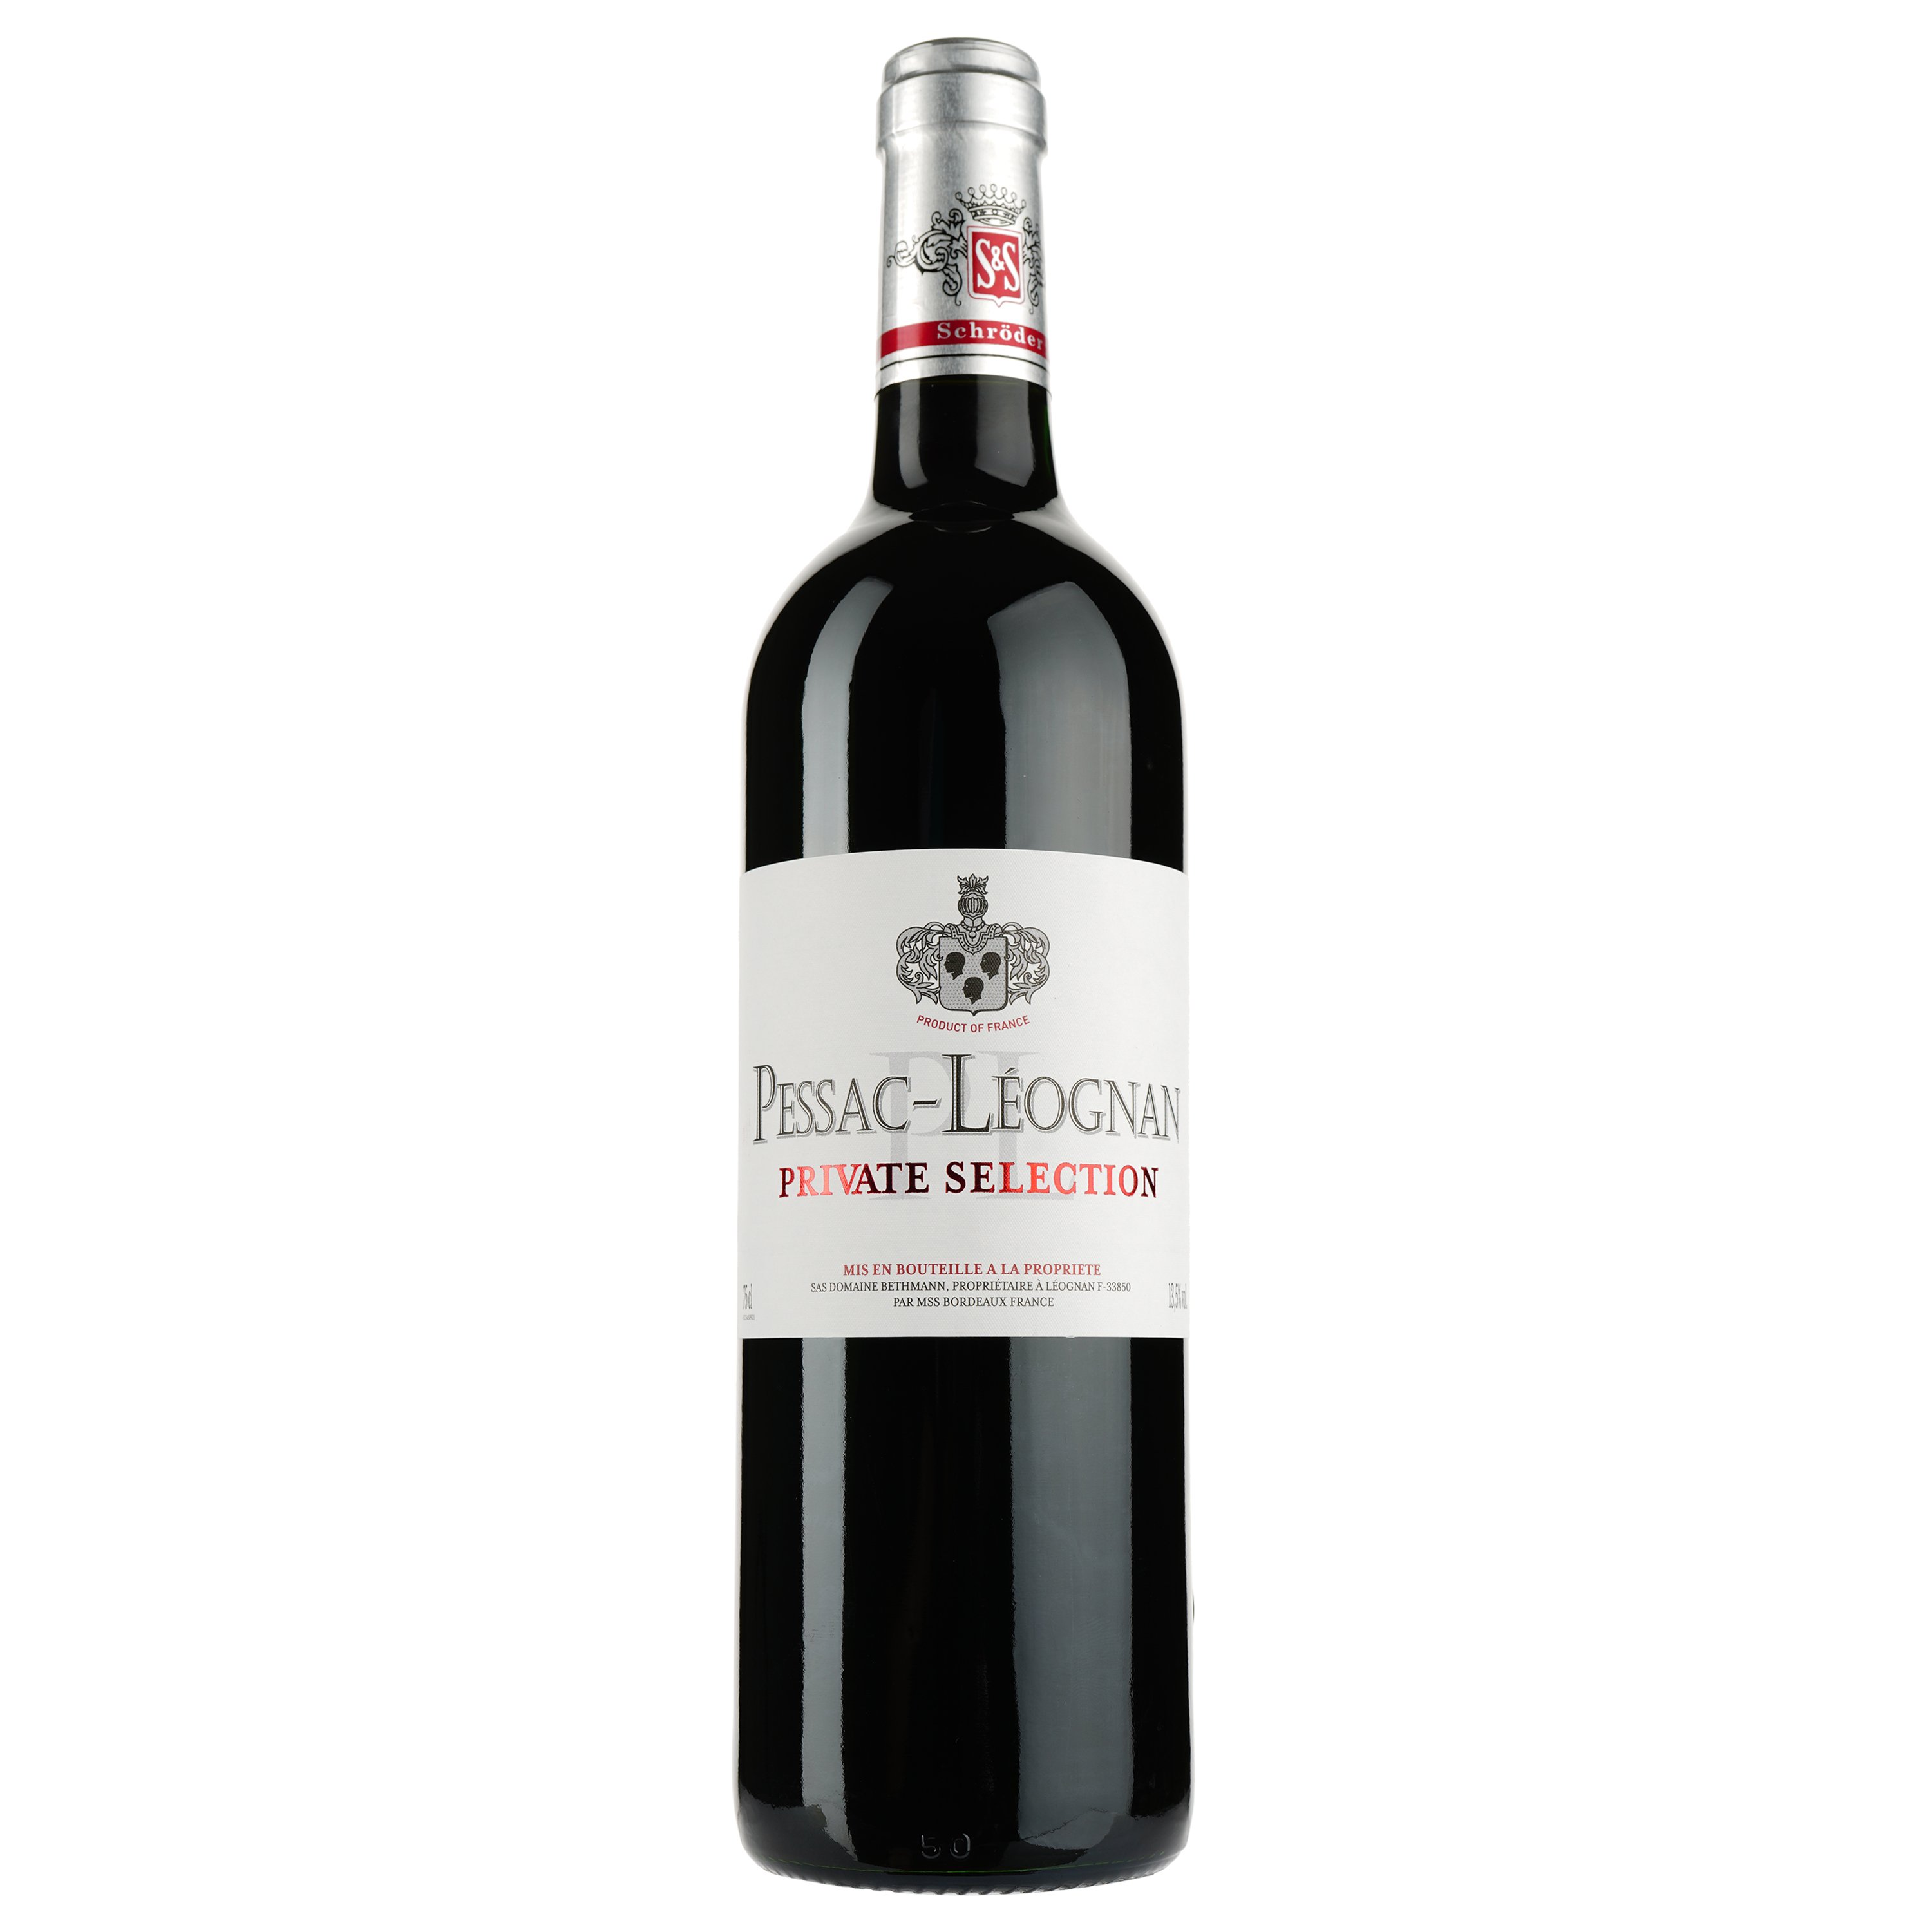 Вино Private Selection Schröder&Schÿler AOP Pessac-Leognan 2013, червоне, сухе, 0,75 л - фото 1